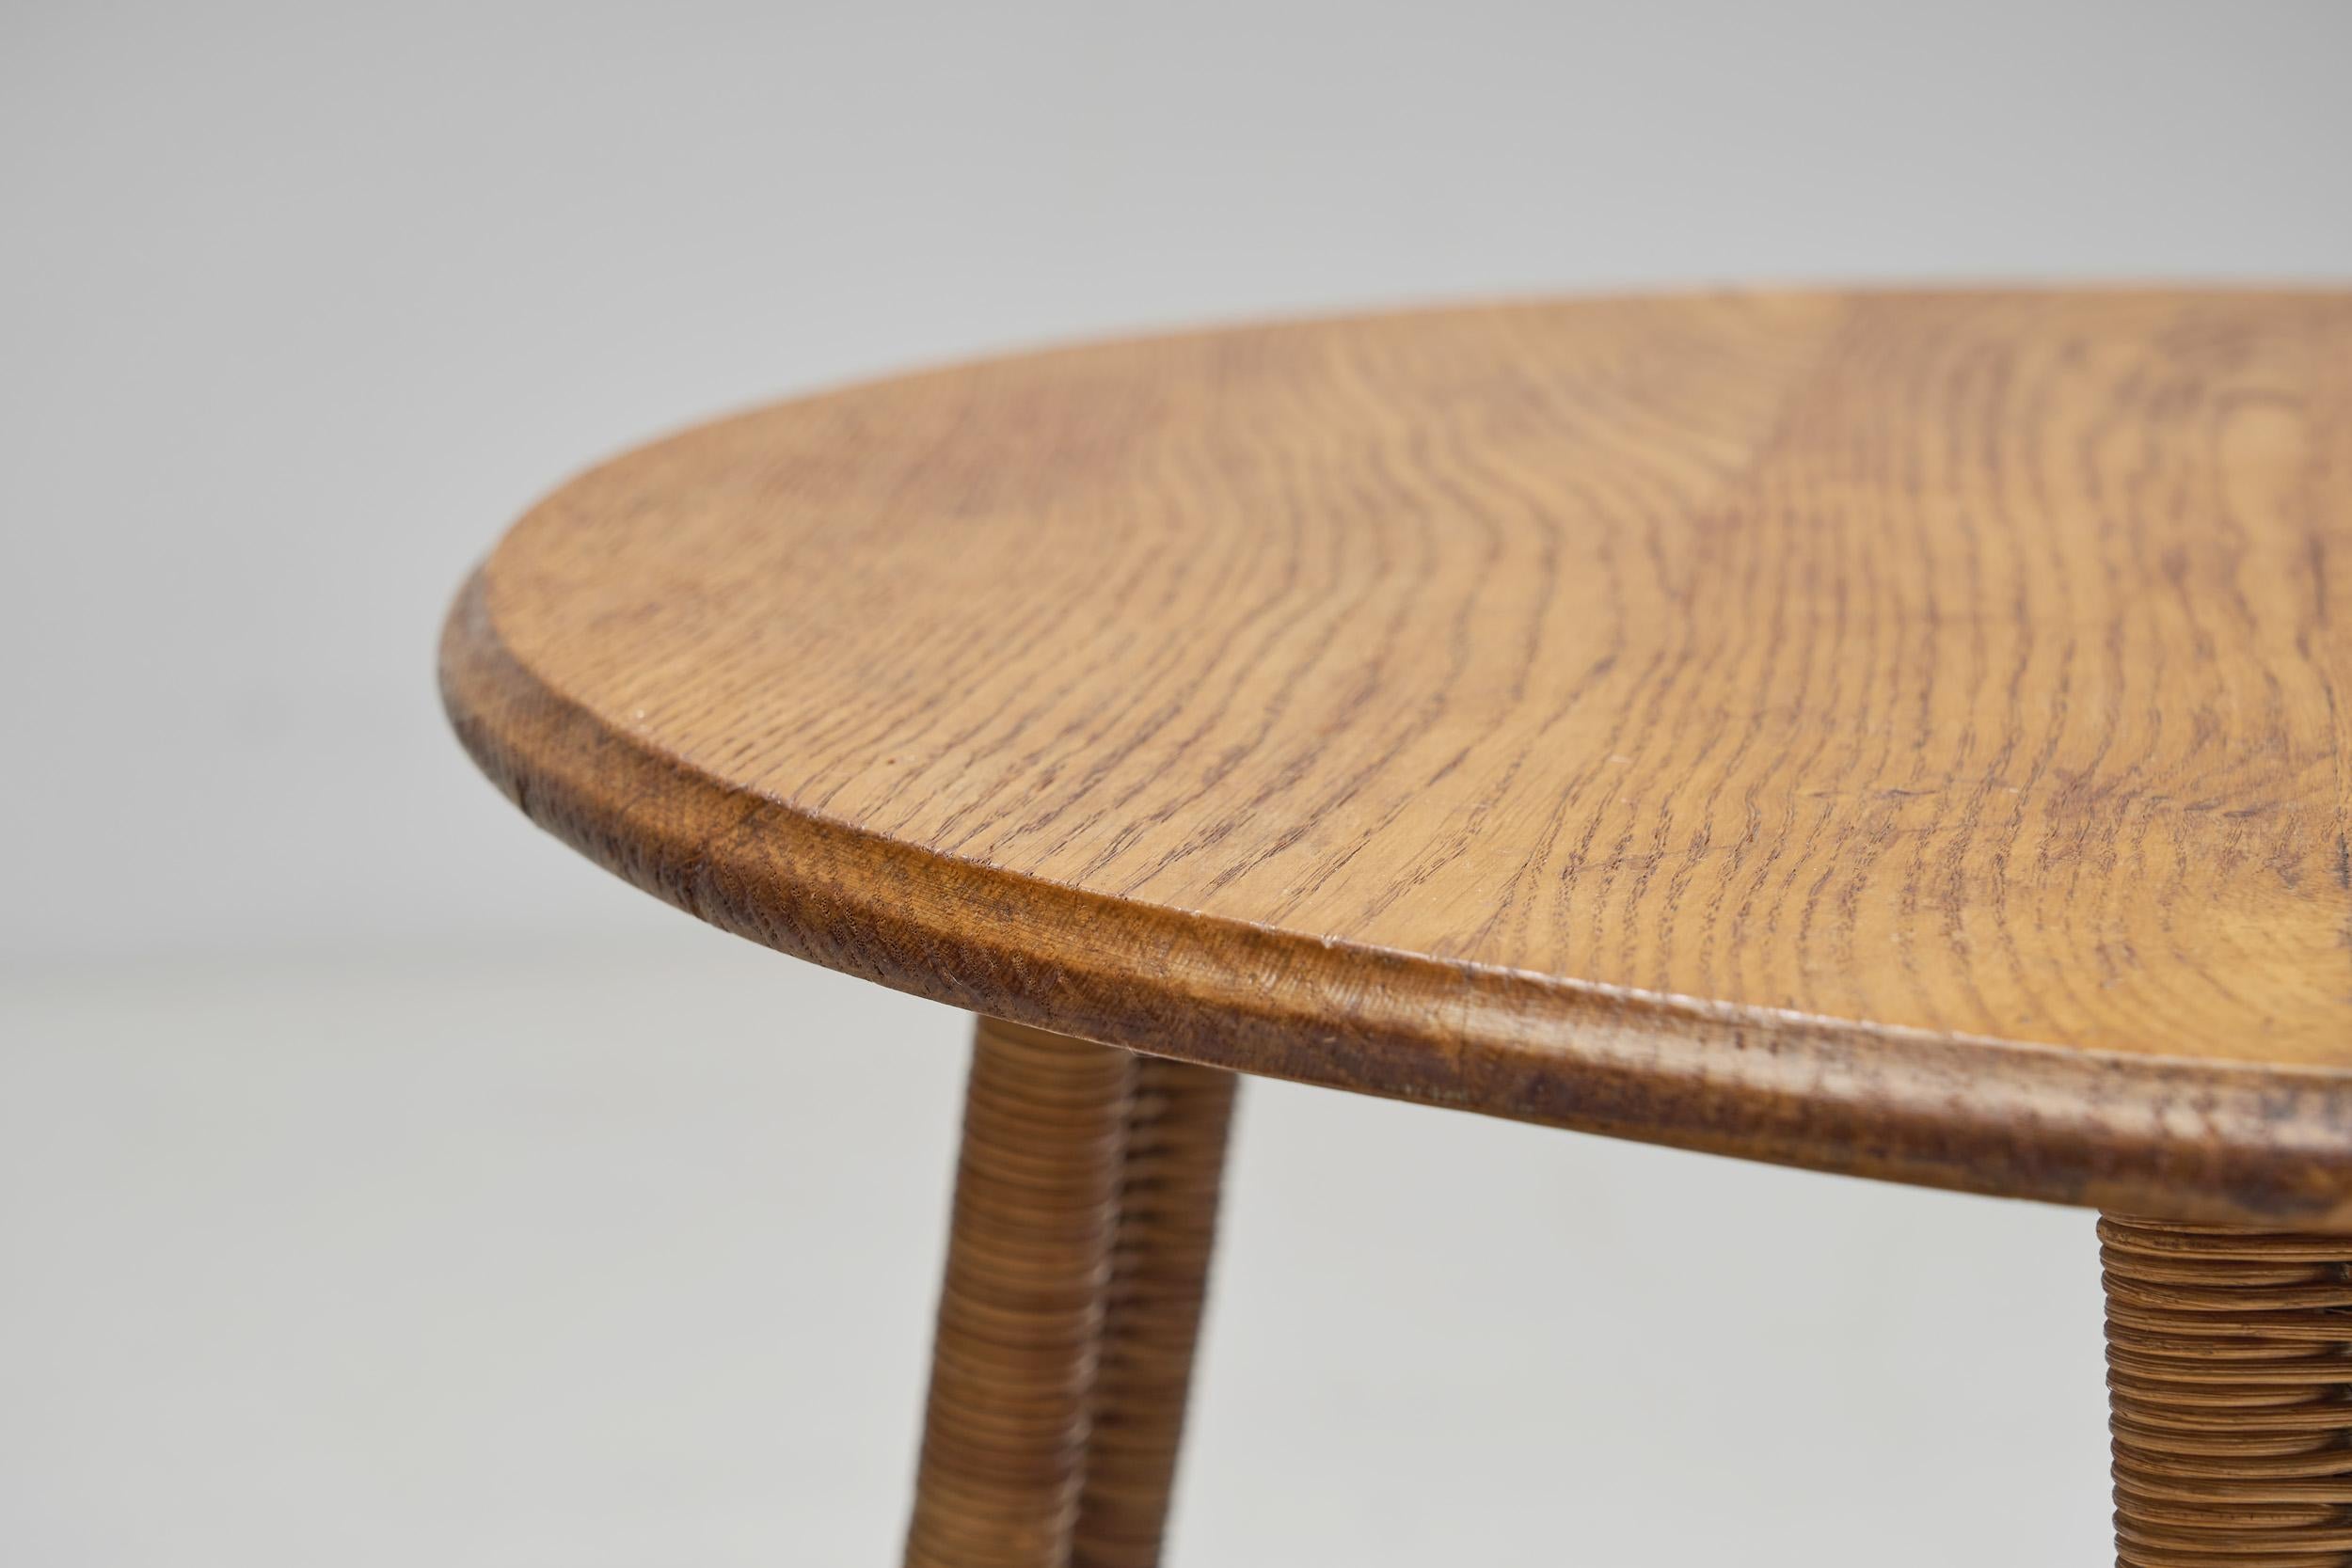 Circular Oak Coffee Table With Wicker Legs, Europe 20th Century 4